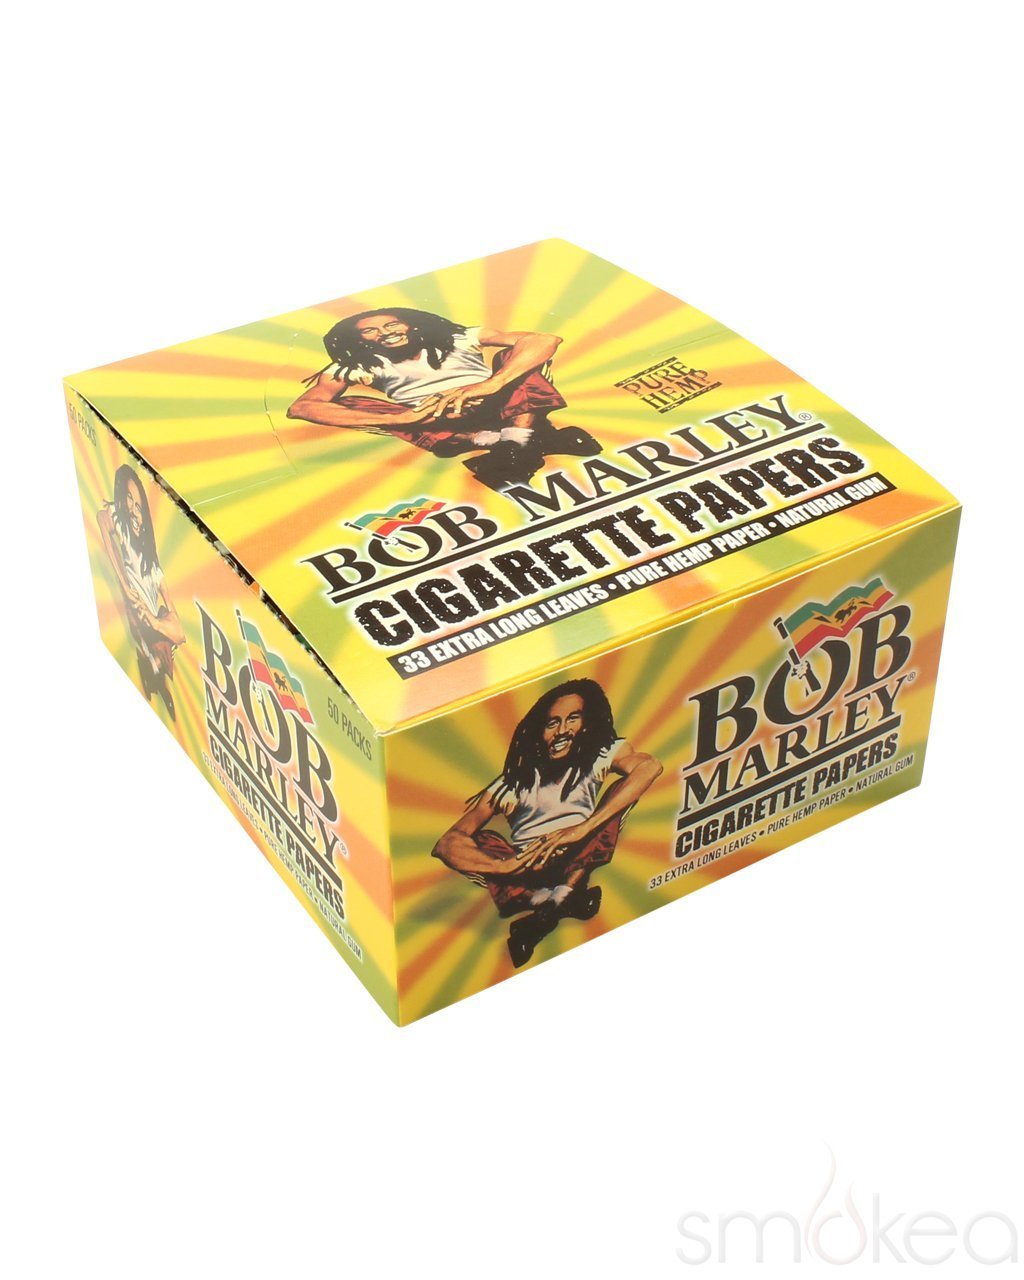 Bob Marley Kingsize Hemp Rolling Papers (Full Box) - Bittchaser Smoke Shop